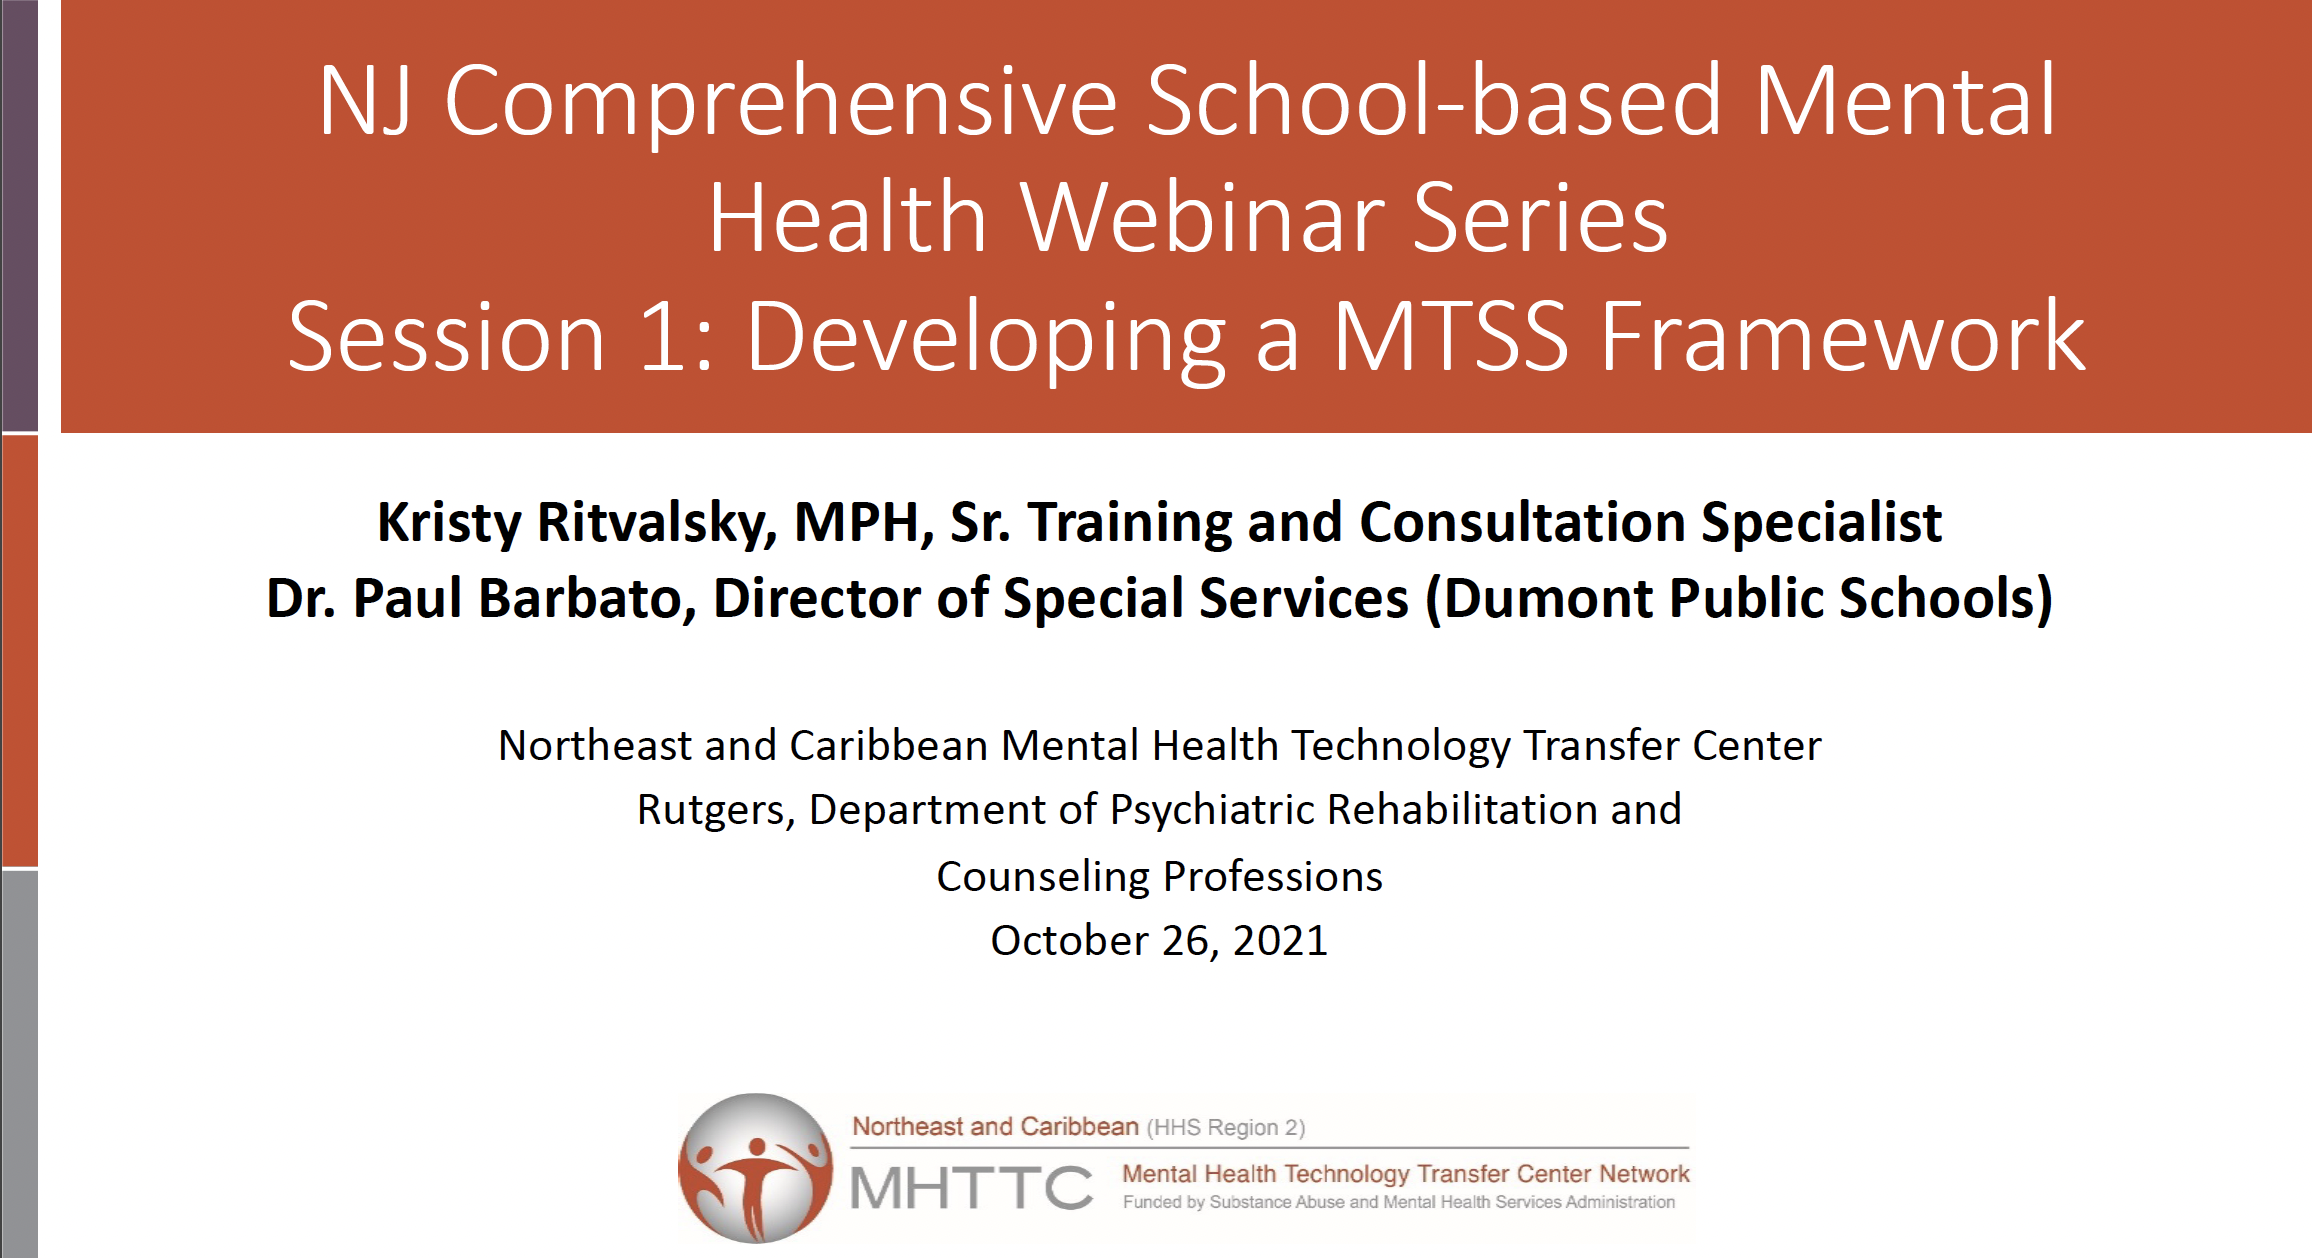 NJ Comprehensive School-based Mental Health Webinar Series Session 1: Developing a MTSS Framework